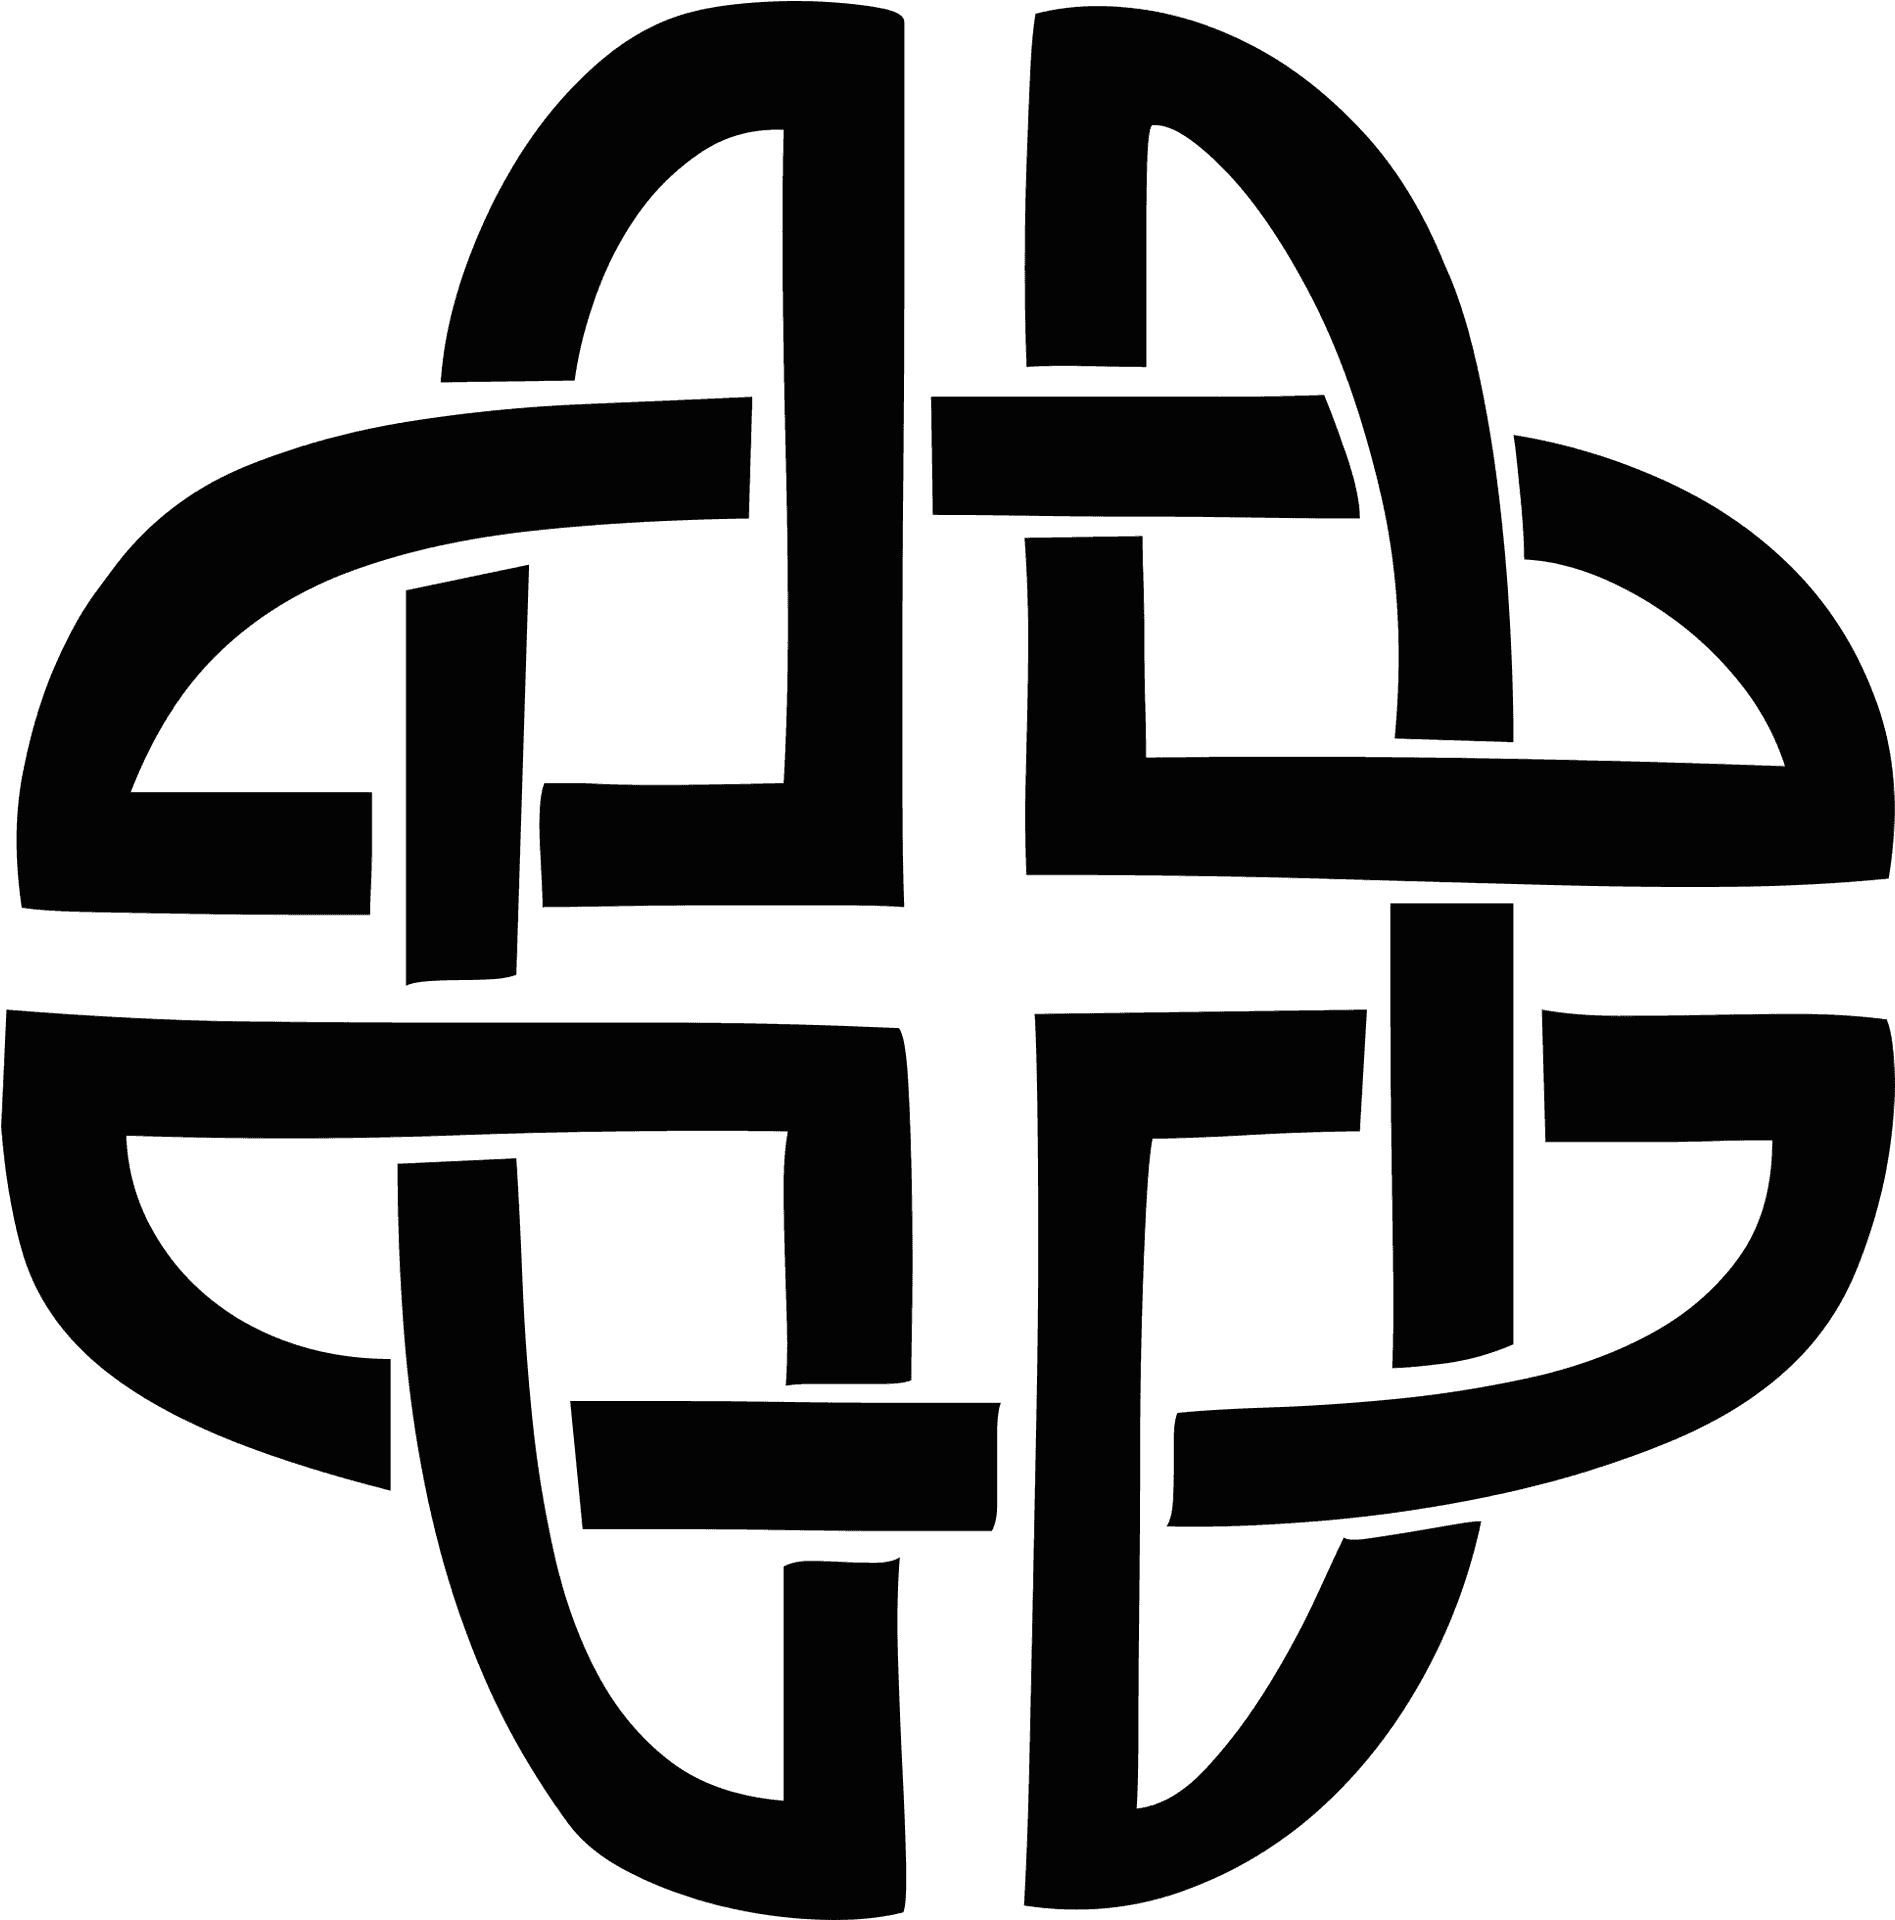 Celtic Knot Design Graphic PNG